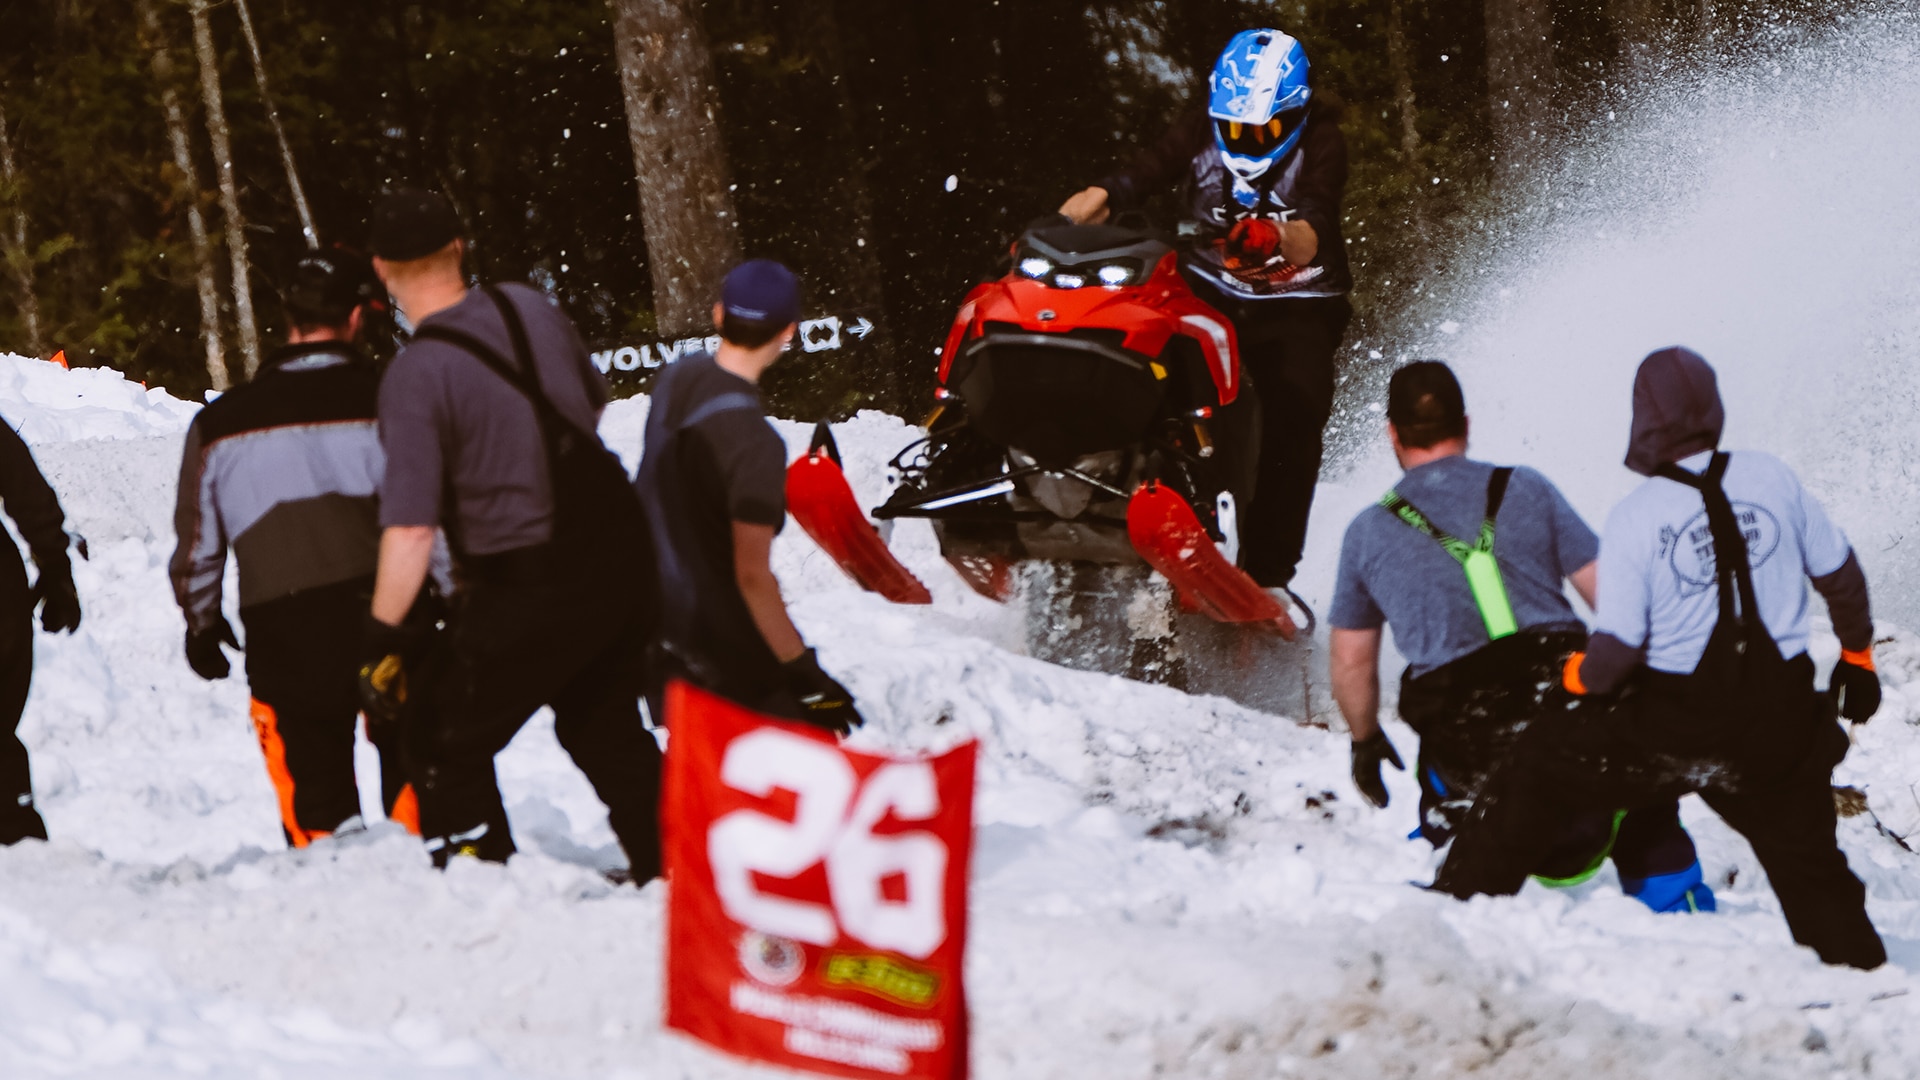 Jason Ribi racing on a Lynx snowmobile